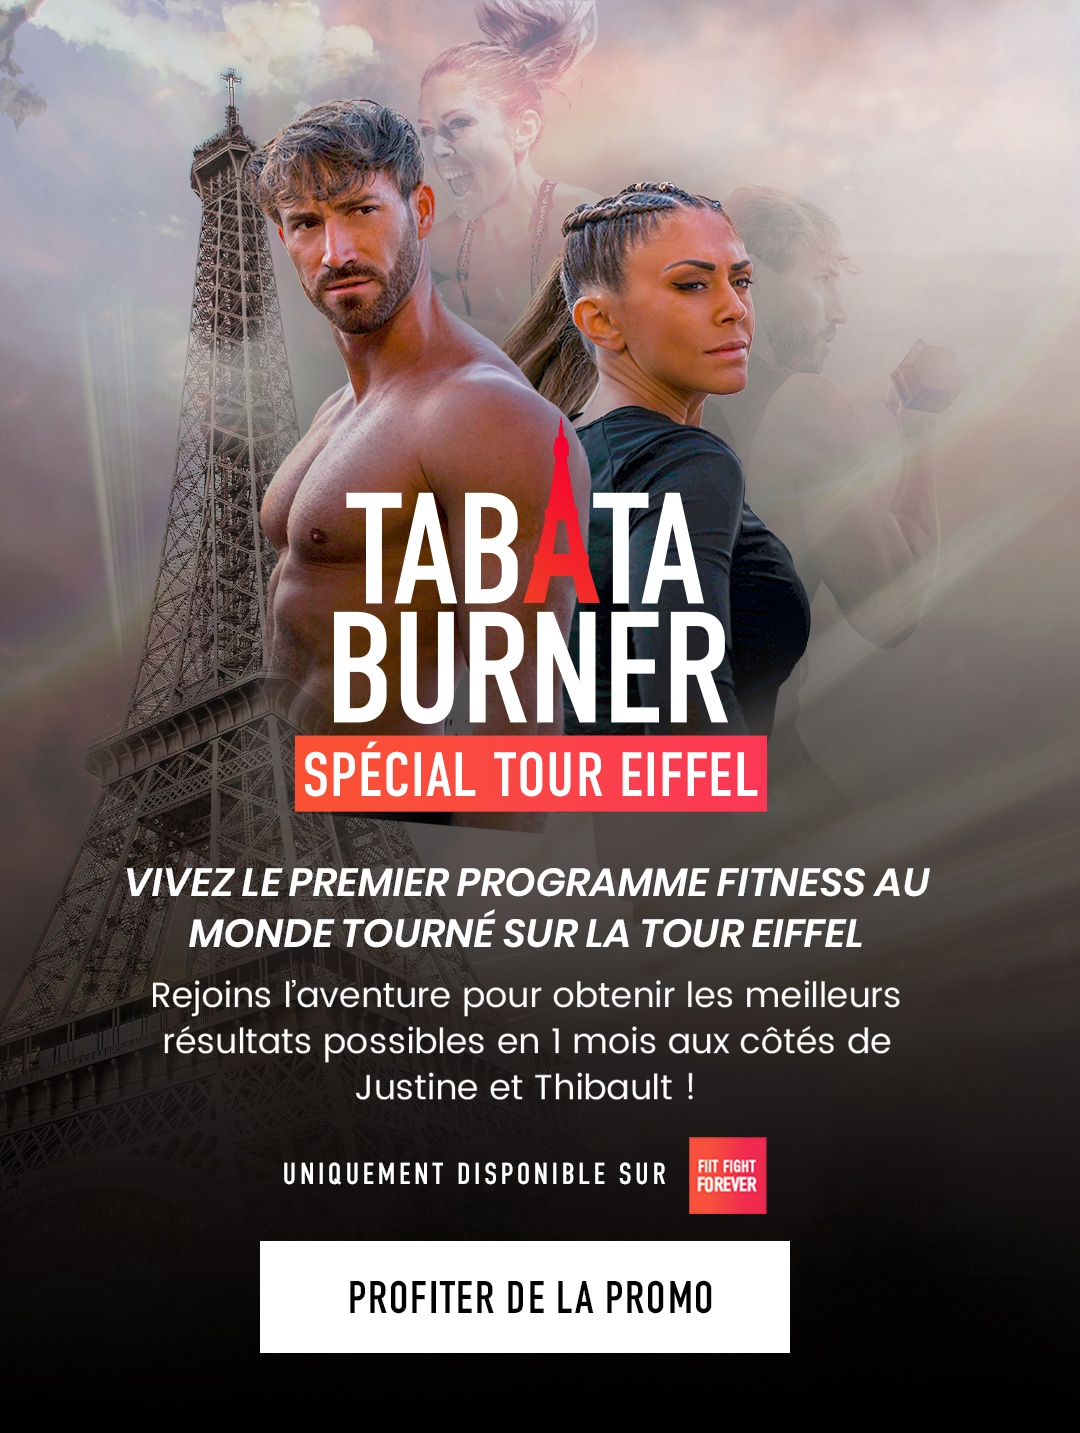 PopUp Tabata Burner - Special Tour Eiffel FiitFightForever